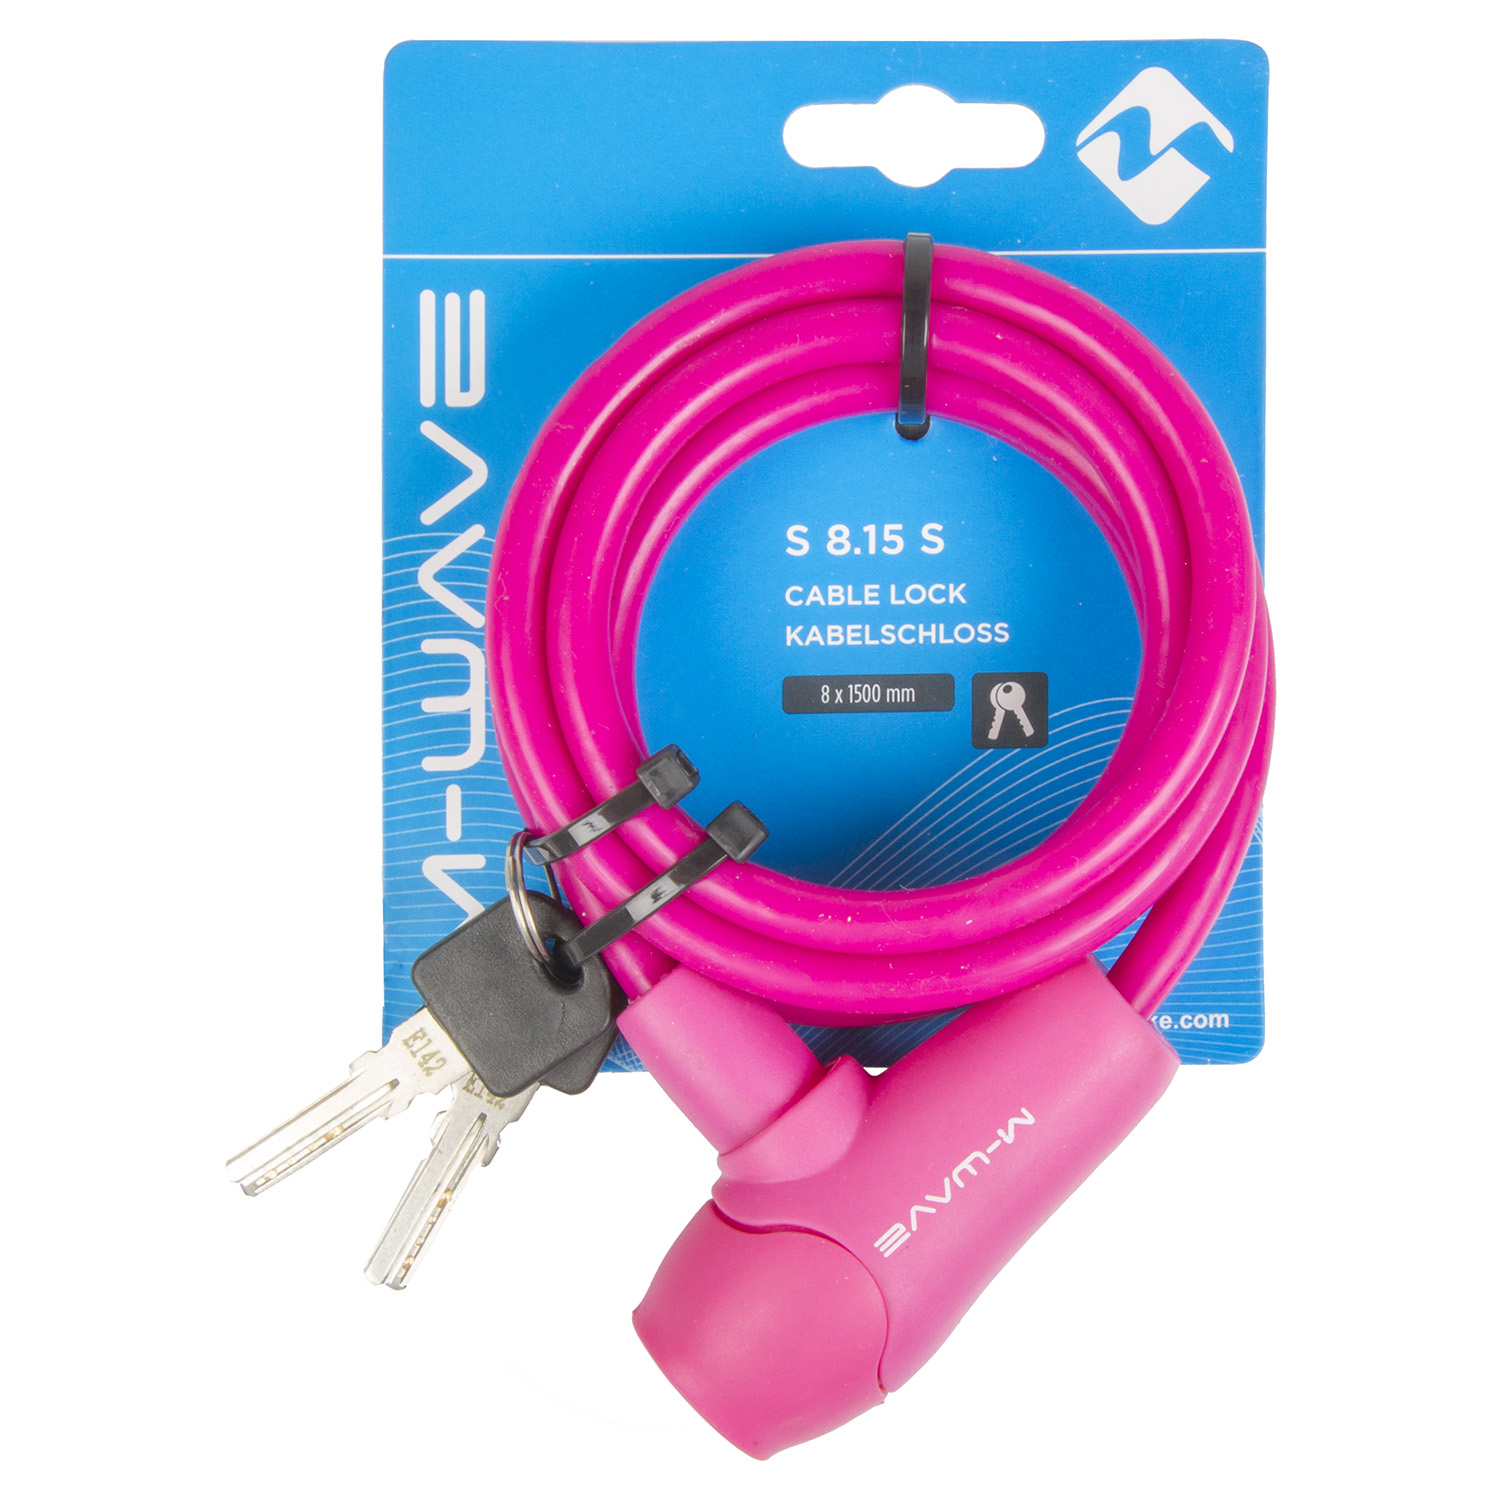 Spiral-Kabelschloss SILIKON 8 mm x 1500 mm in Pink neon